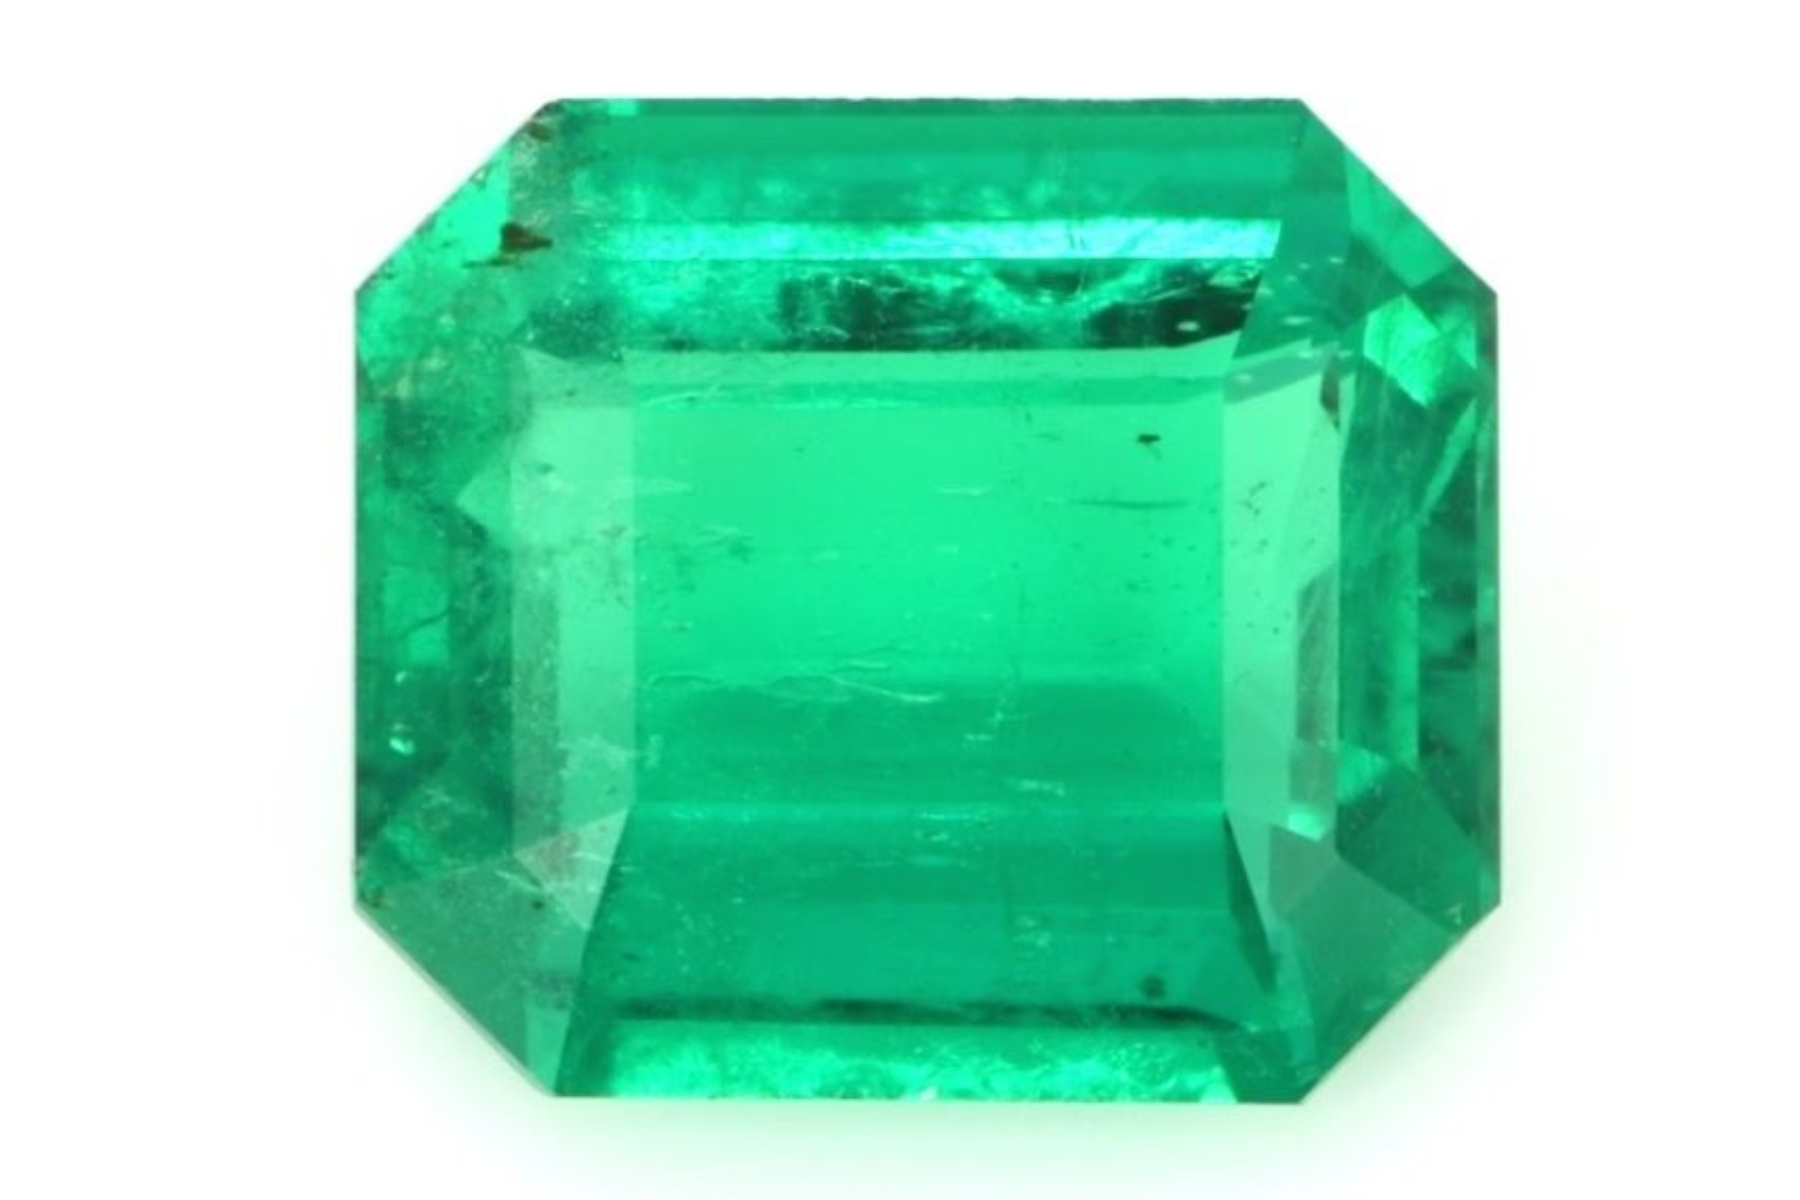 Octagonal emerald stone